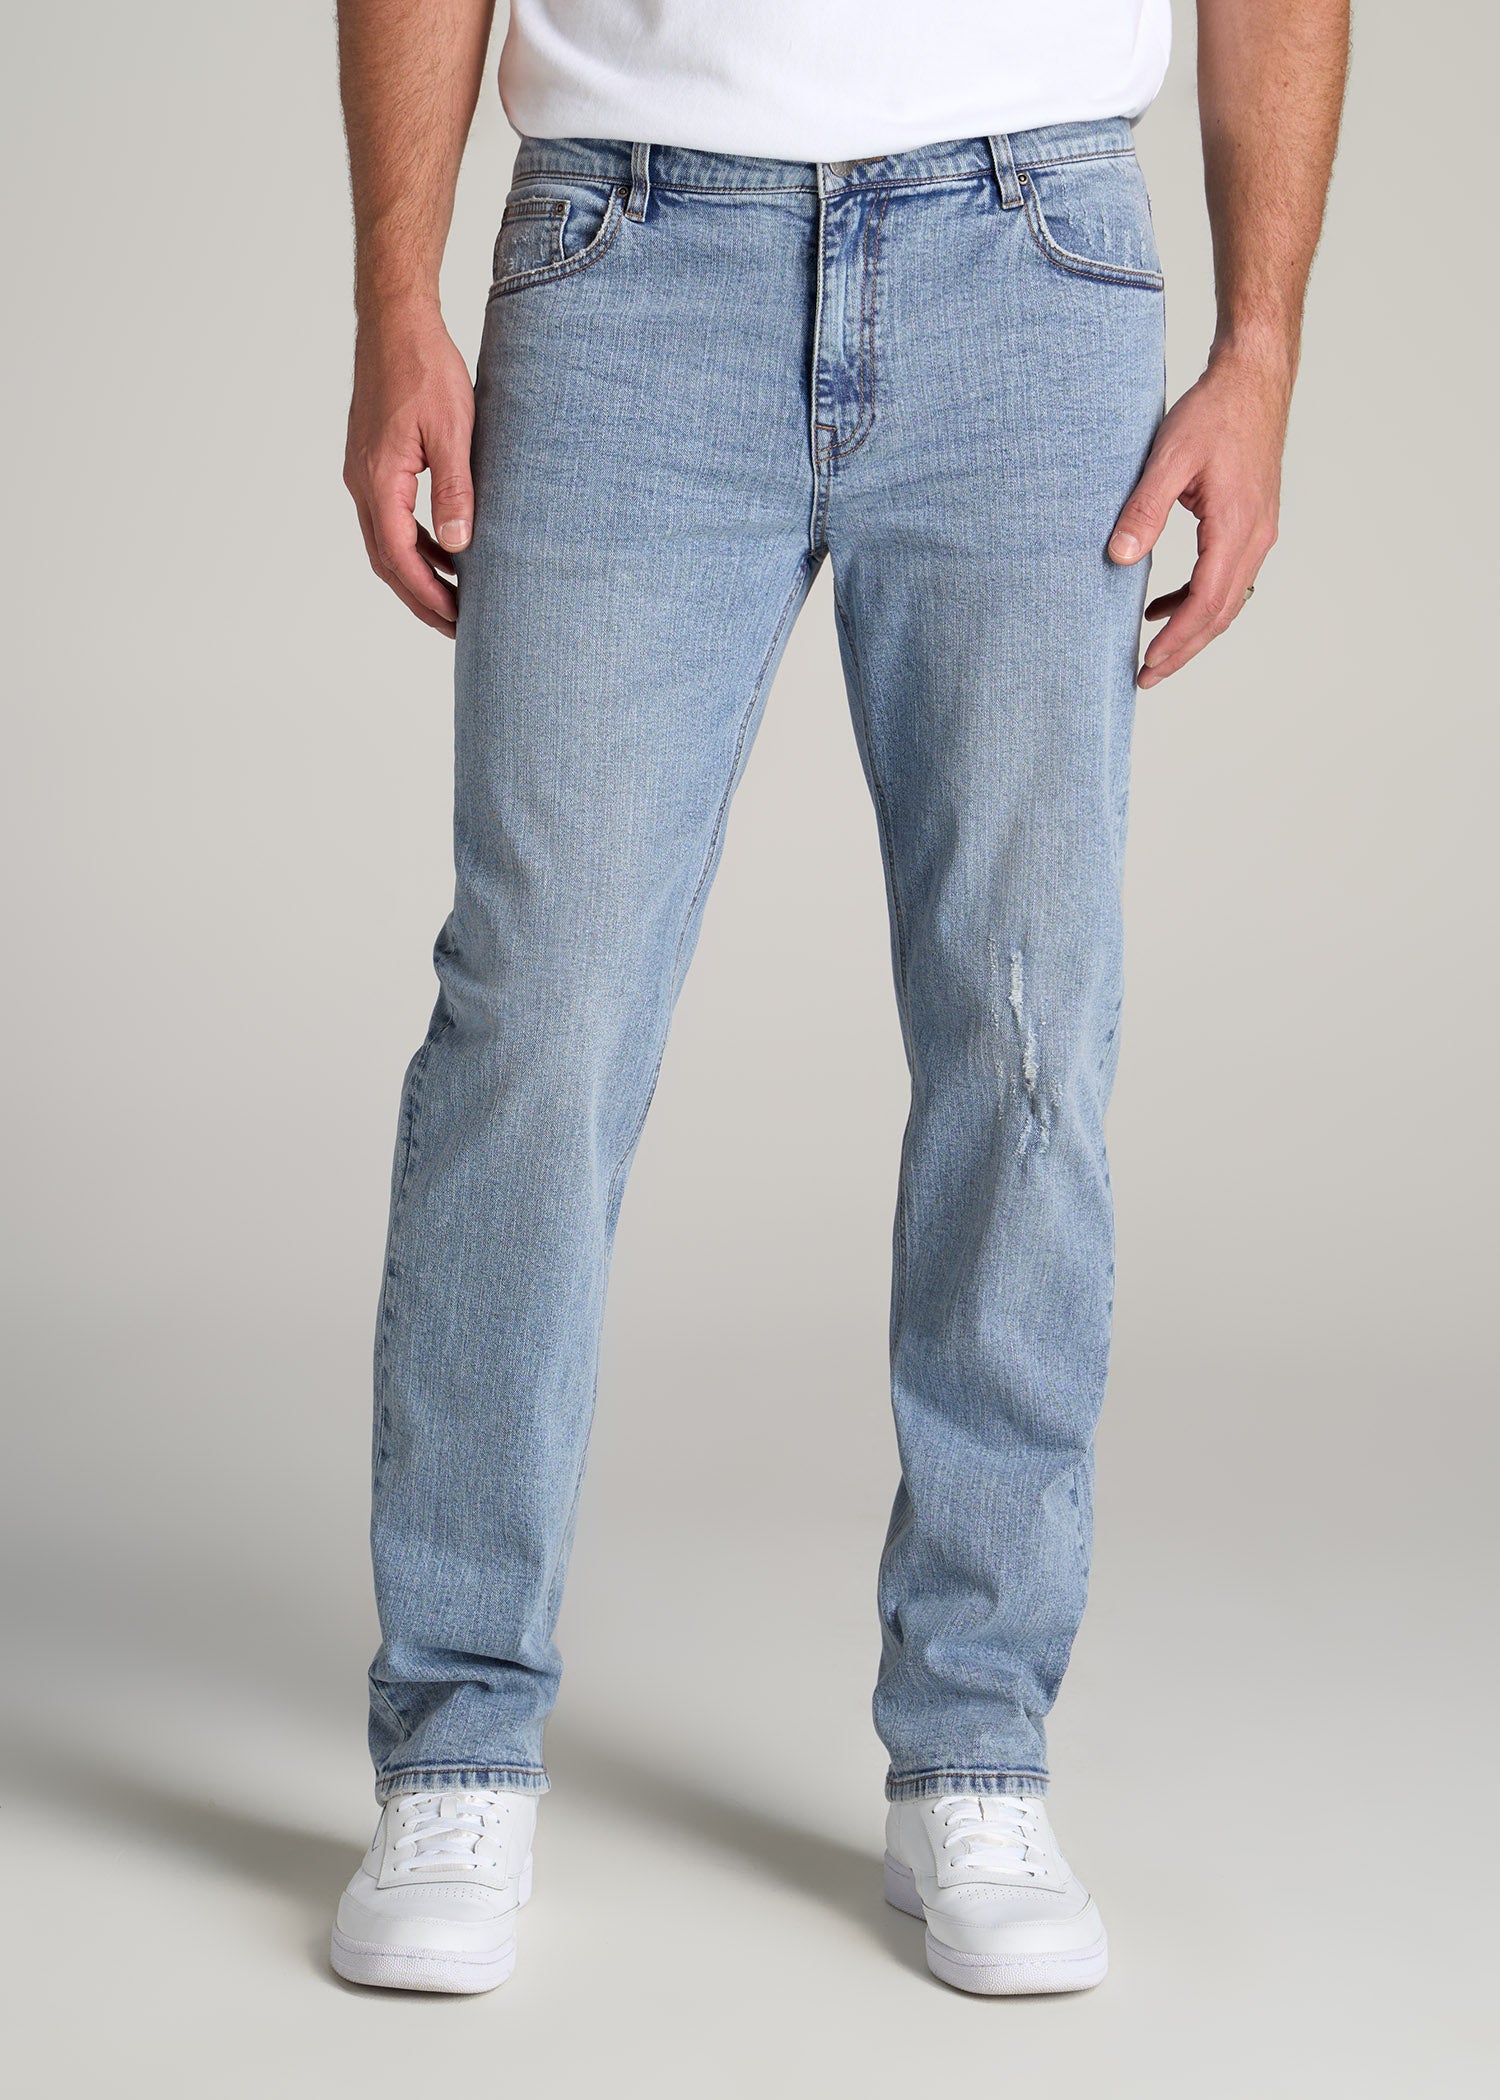       American-Tall-Men-J1-Jeans-Retro-Blue-front